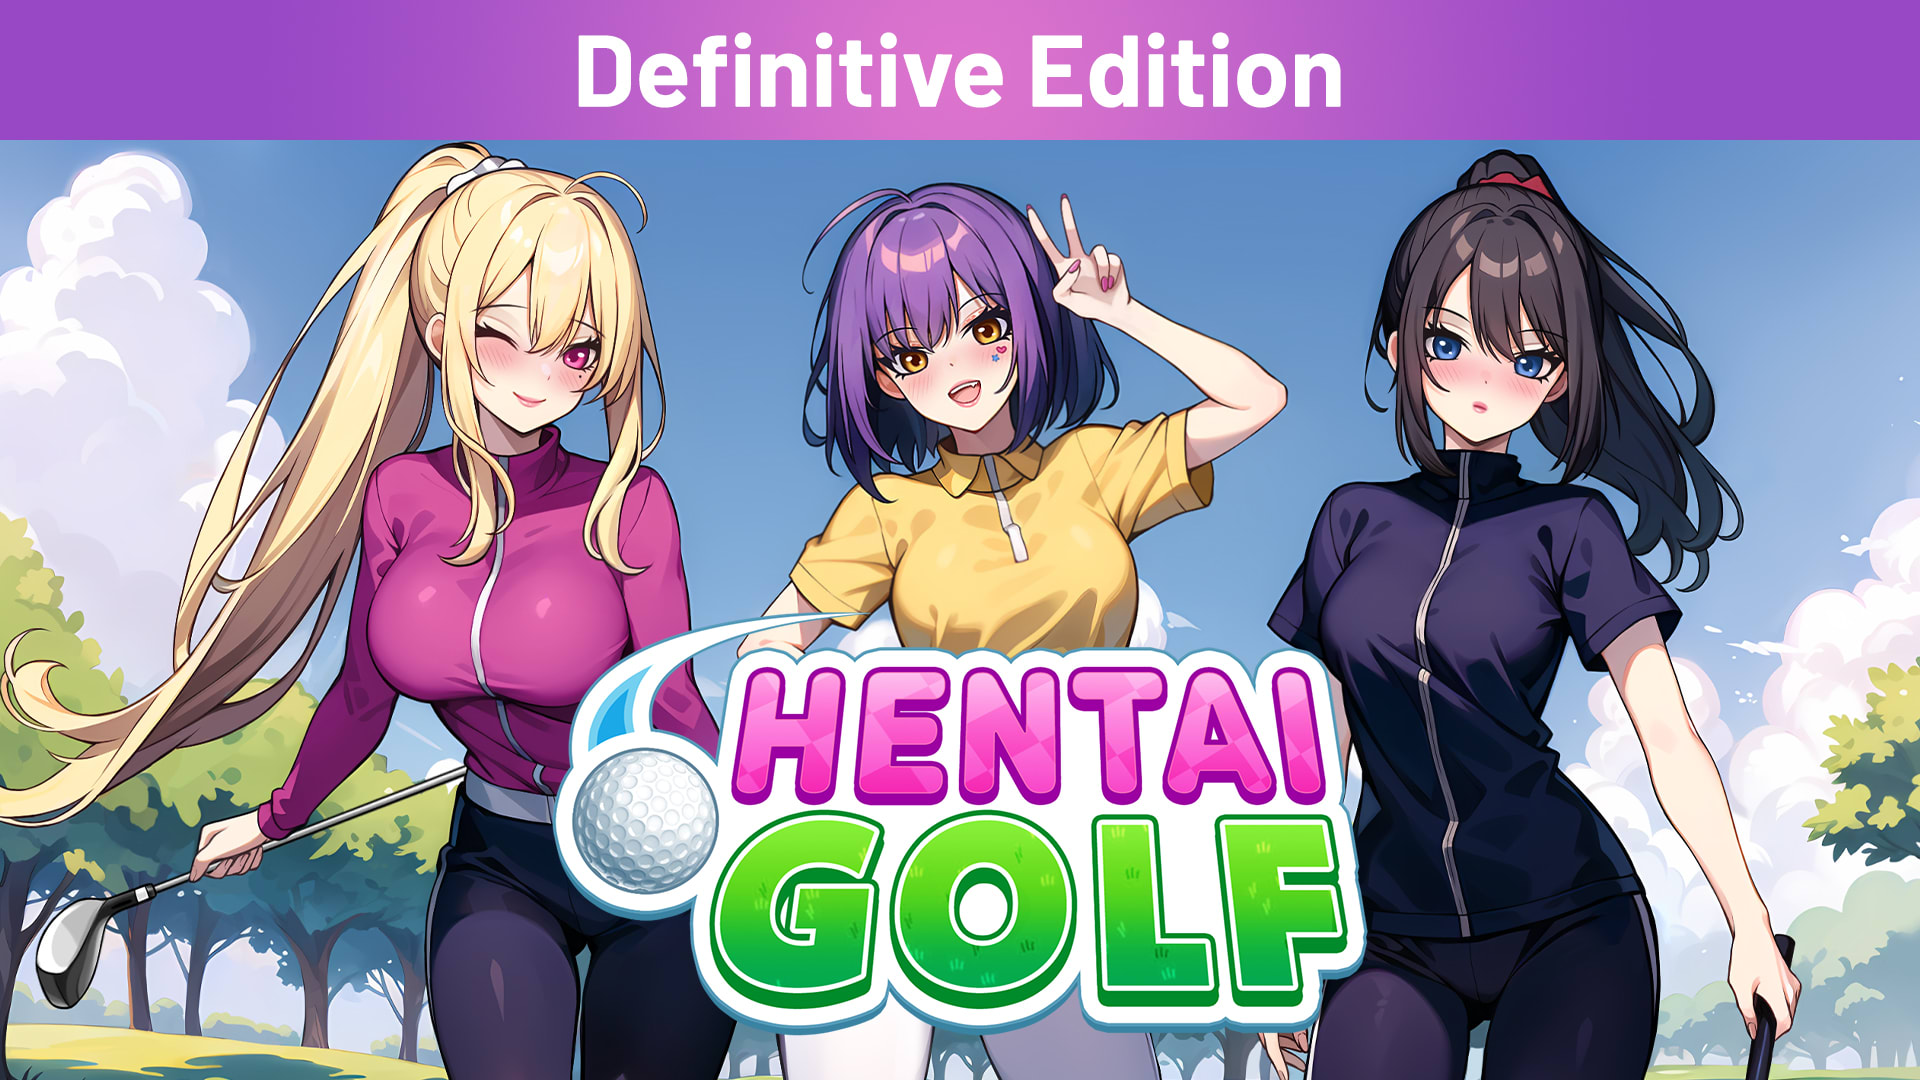 Hentai Golf Definitive Edition